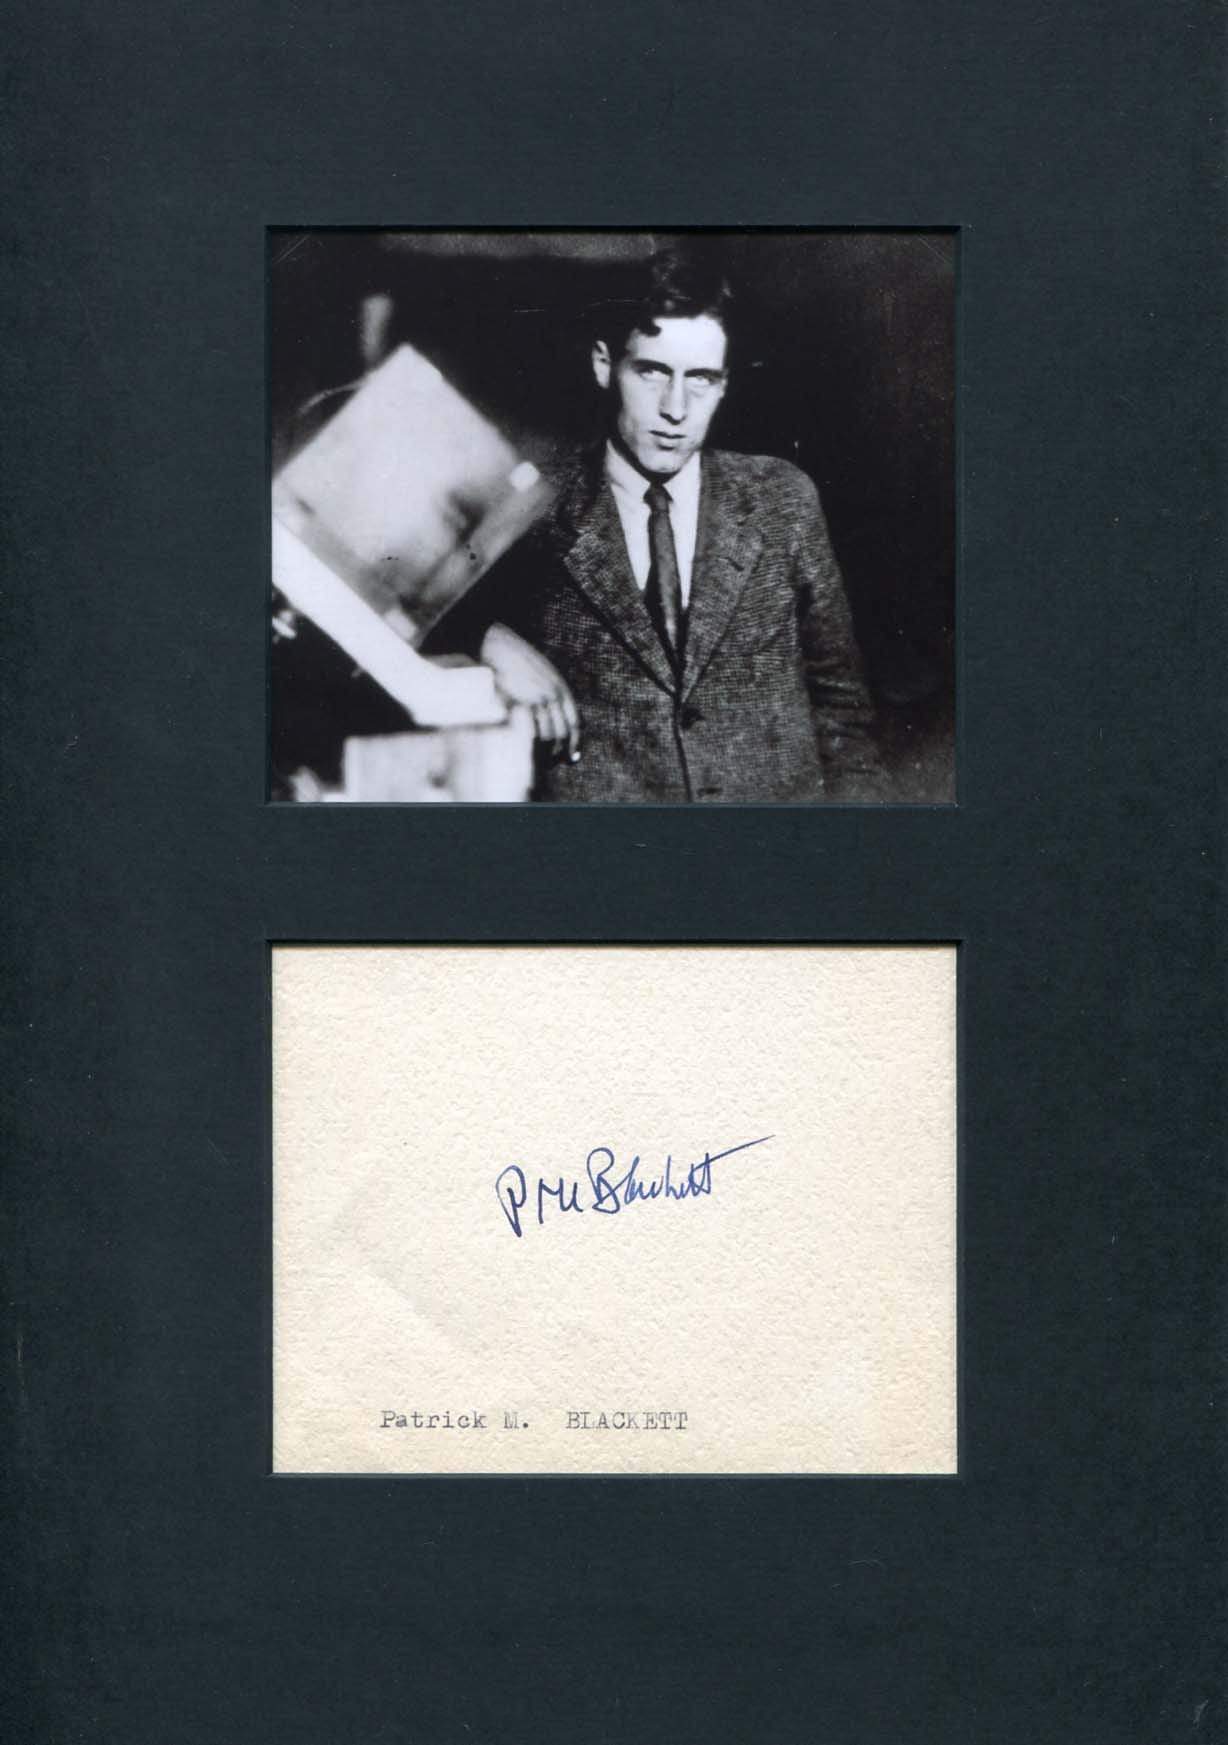 Blackett, Patrick autograph